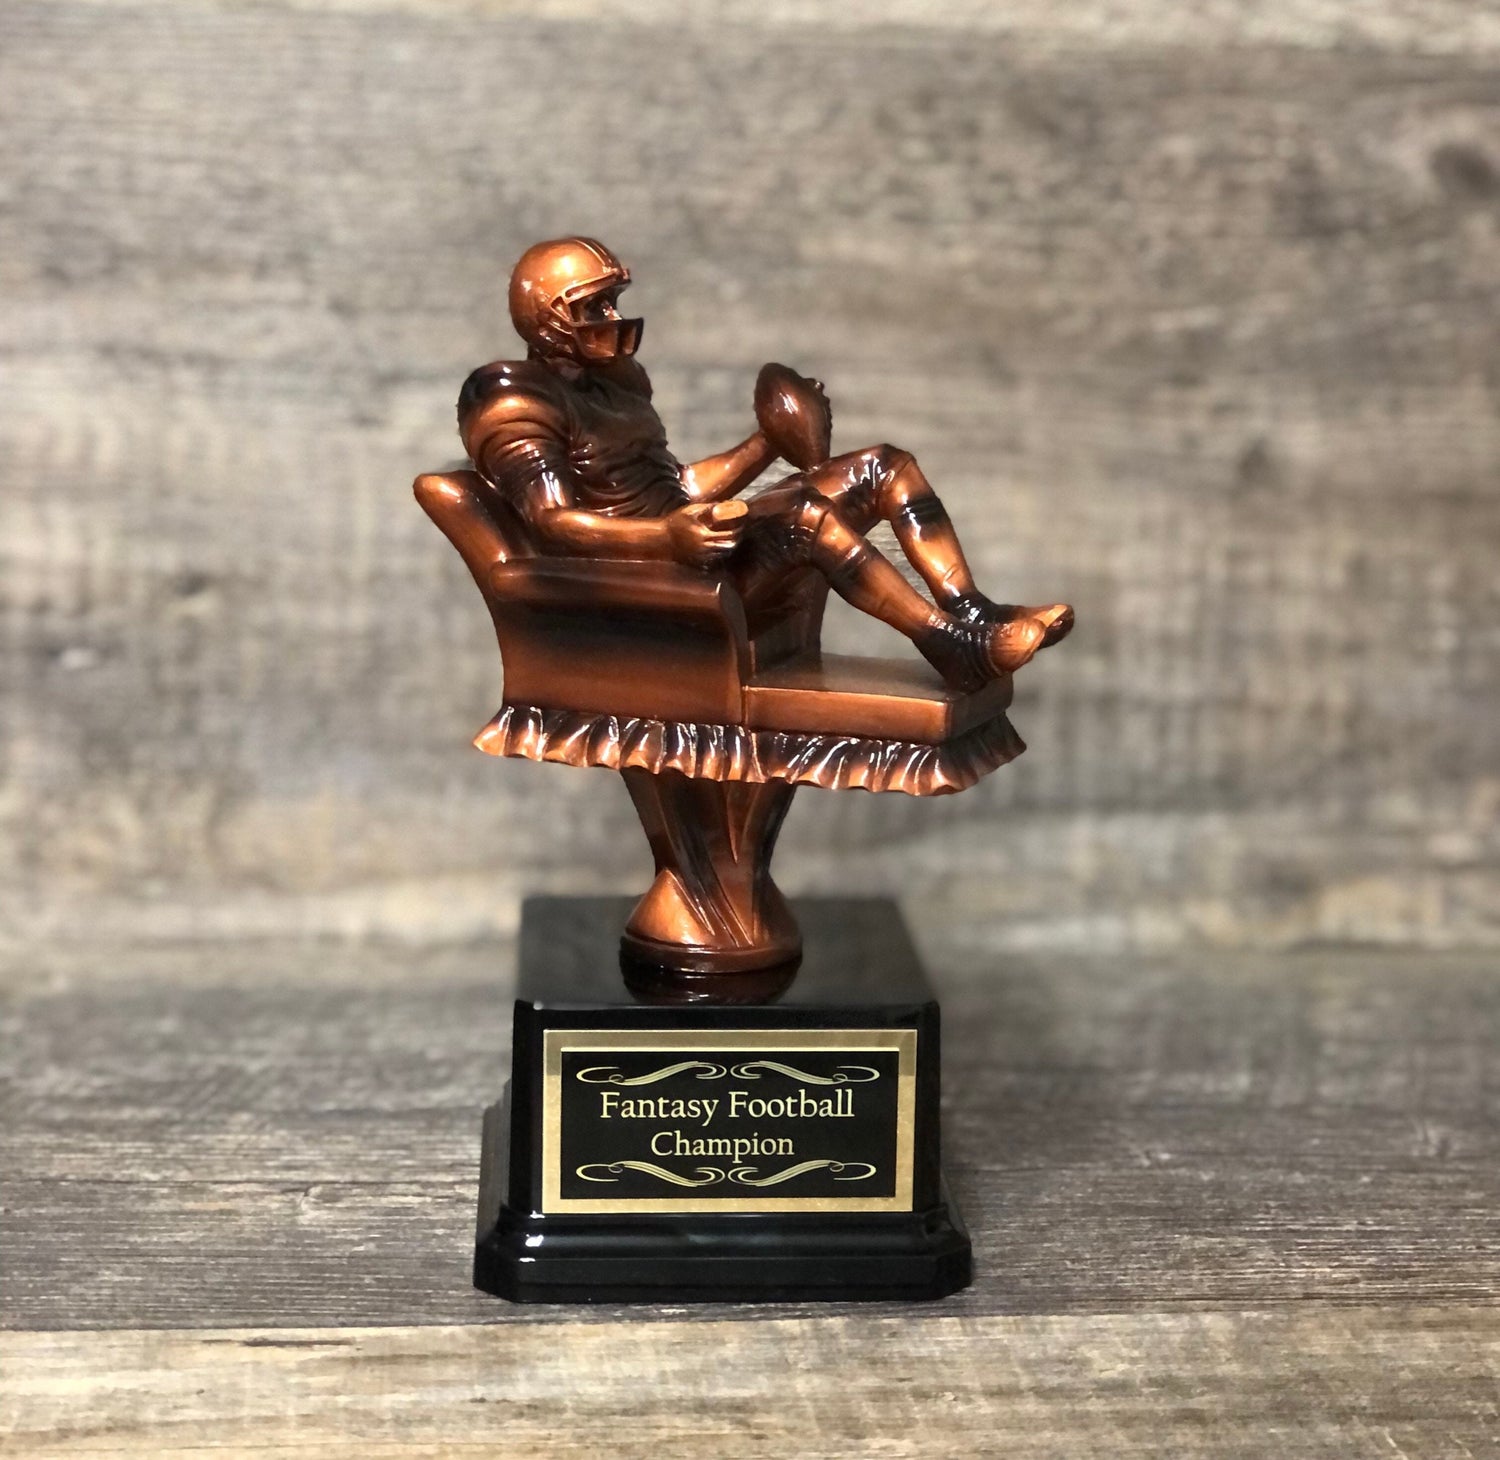 Fantasy Football Trophy Award Armchair Quarterback Football Trophy League Winner 9" Custom Personalized Trophy Free Engraving